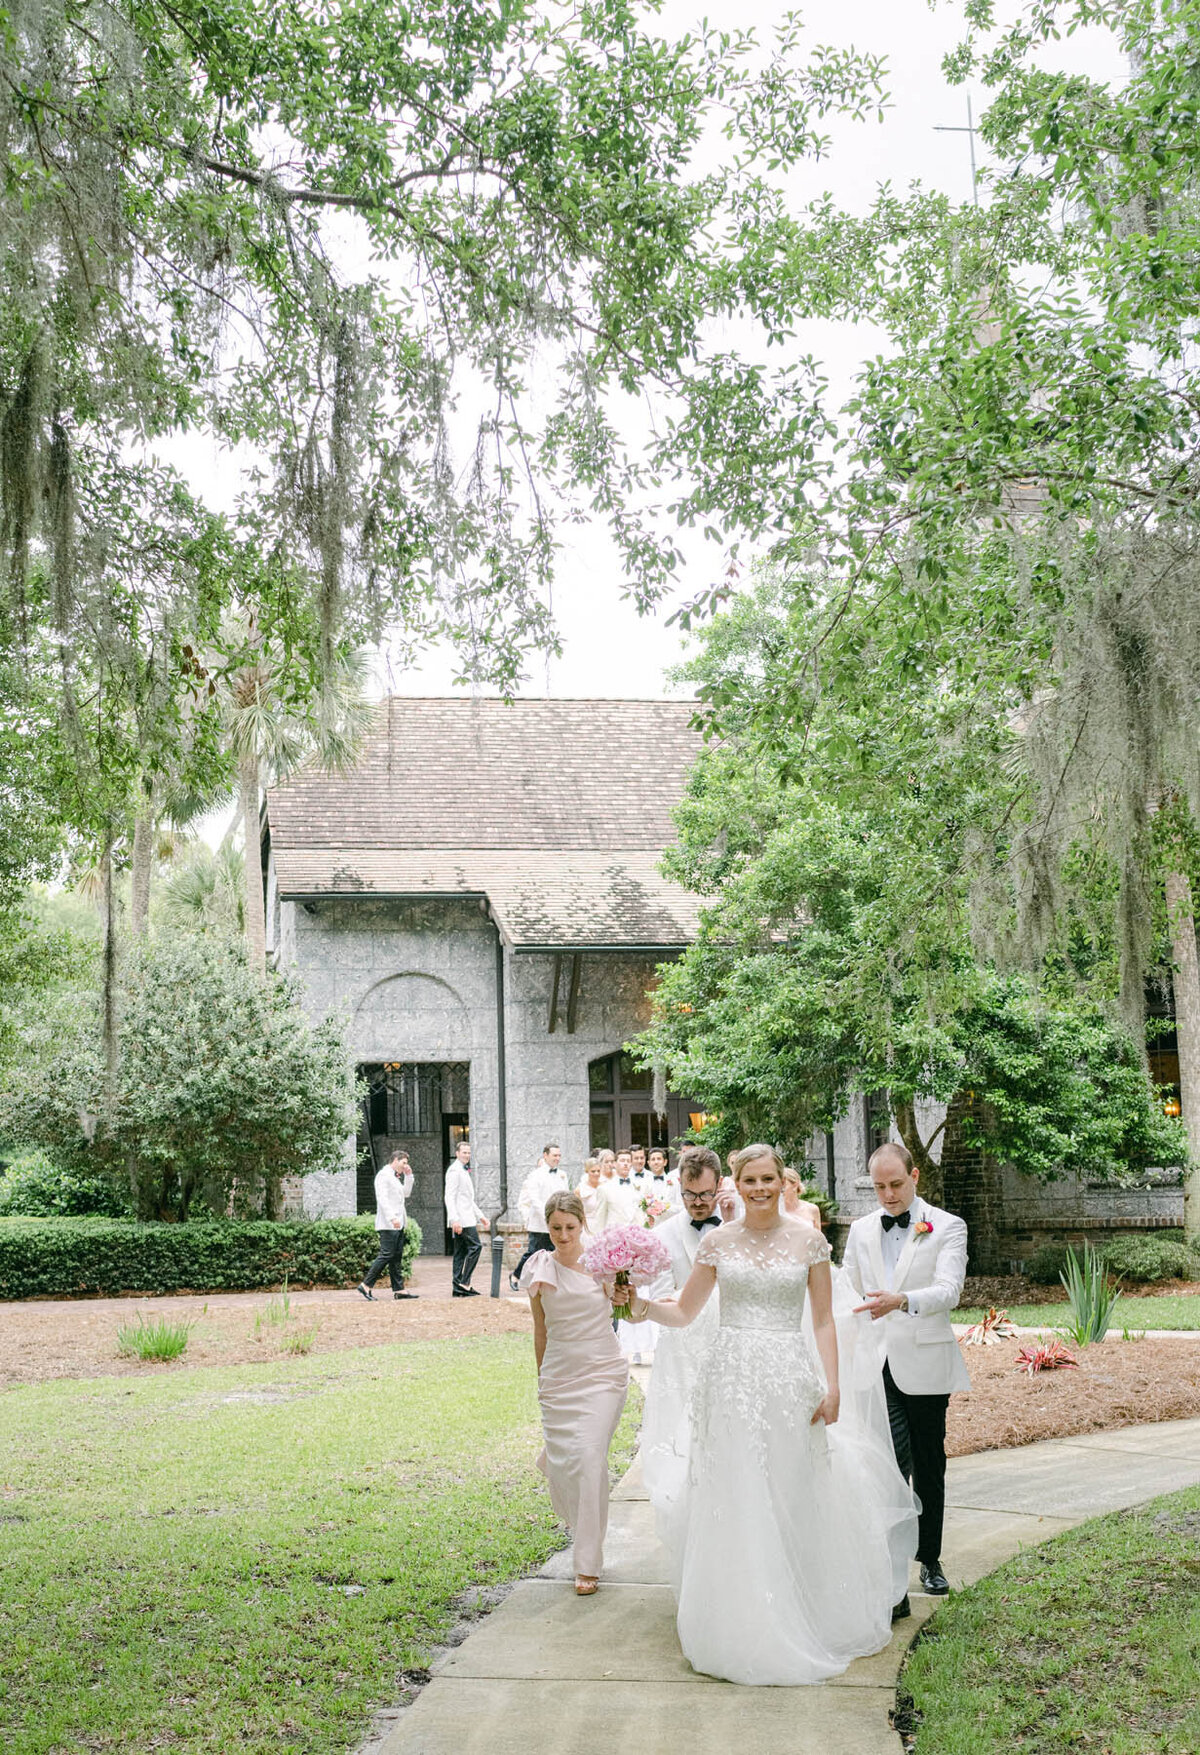 Savannah-Georgia-wedding-planner-luxury-colorful-fun-event-kelli boyd photography0065